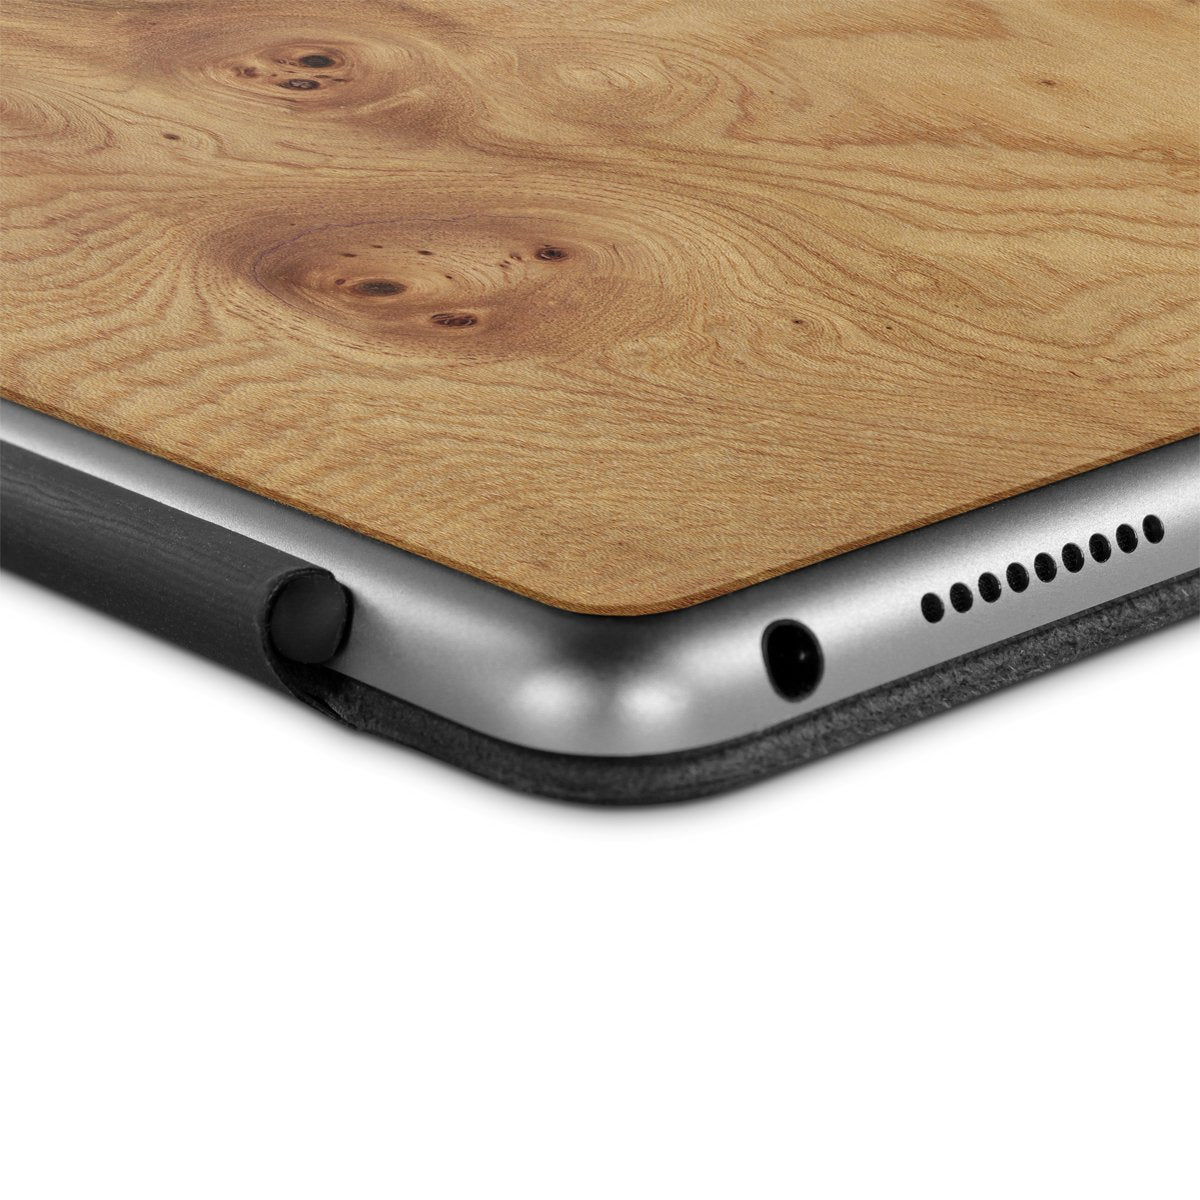 iPad Air 10.5-inch (3rd Gen) — #WoodBack Skin